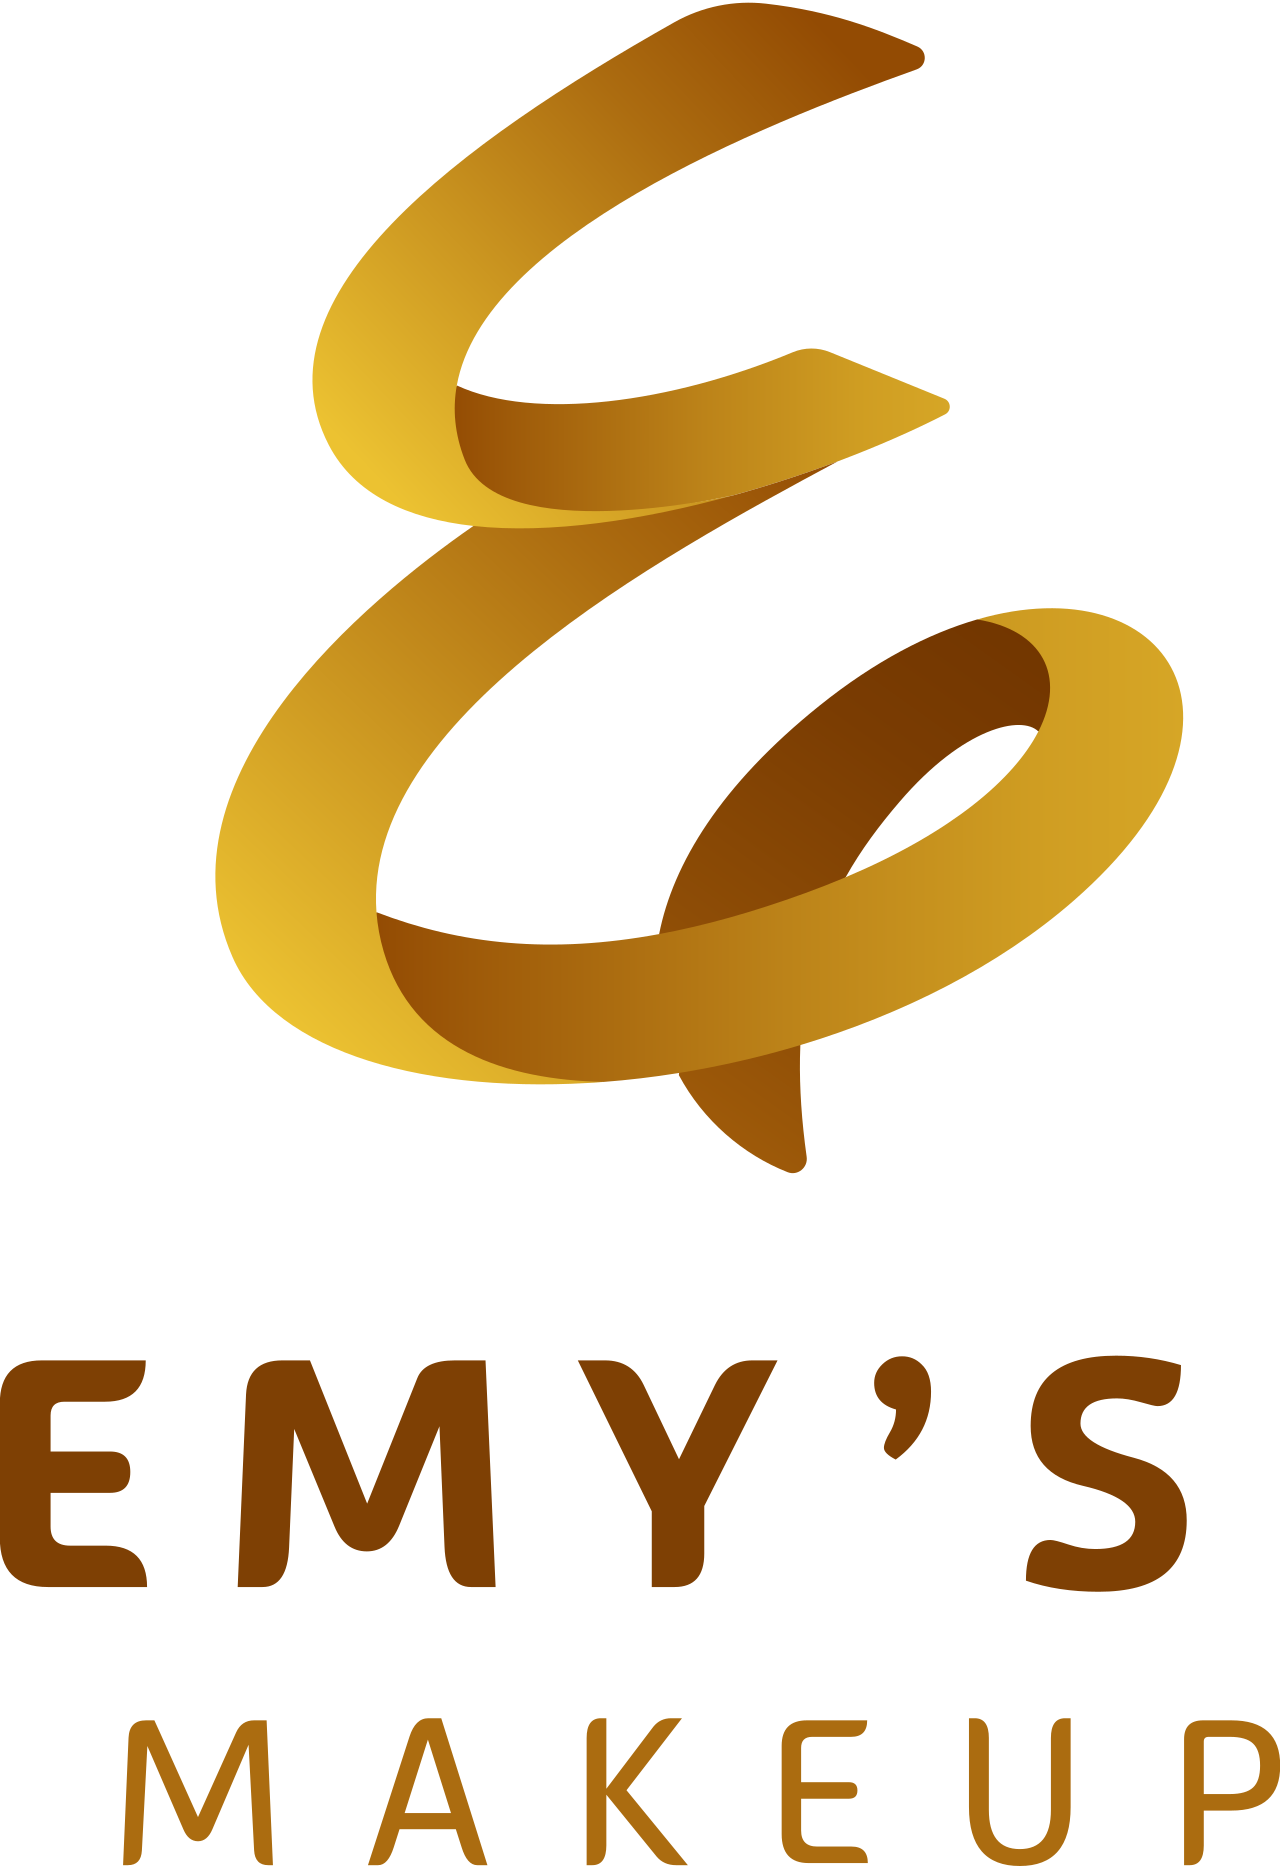 Emy’s's web page